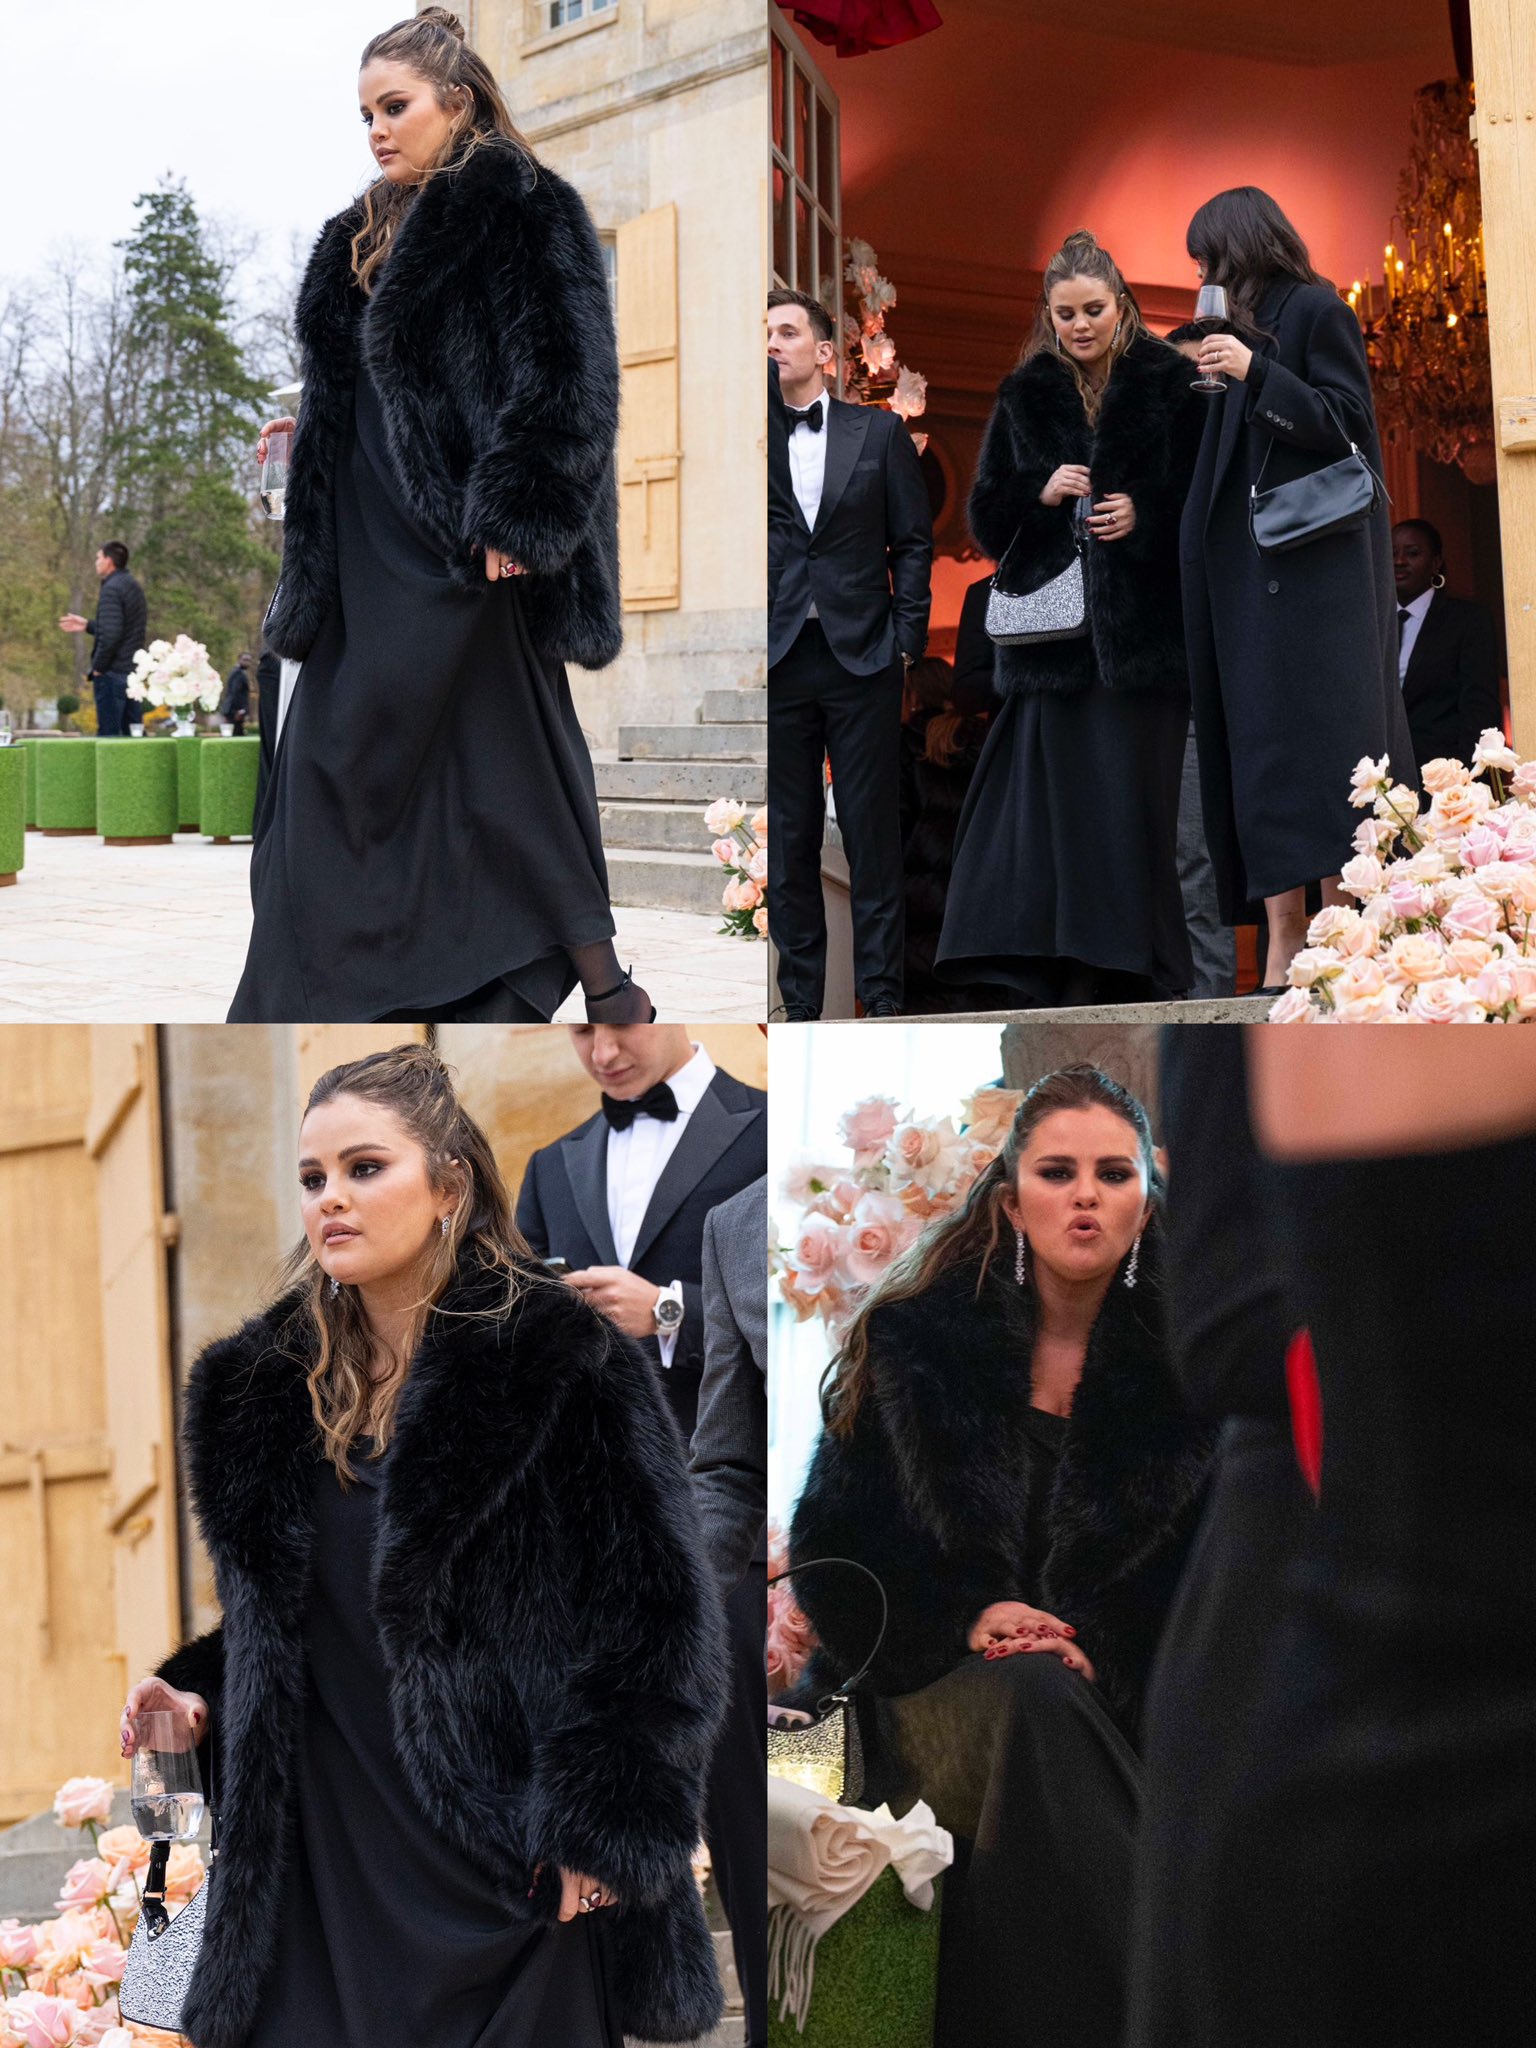 Selena Gomez Wedding Paris Black Fur Coat